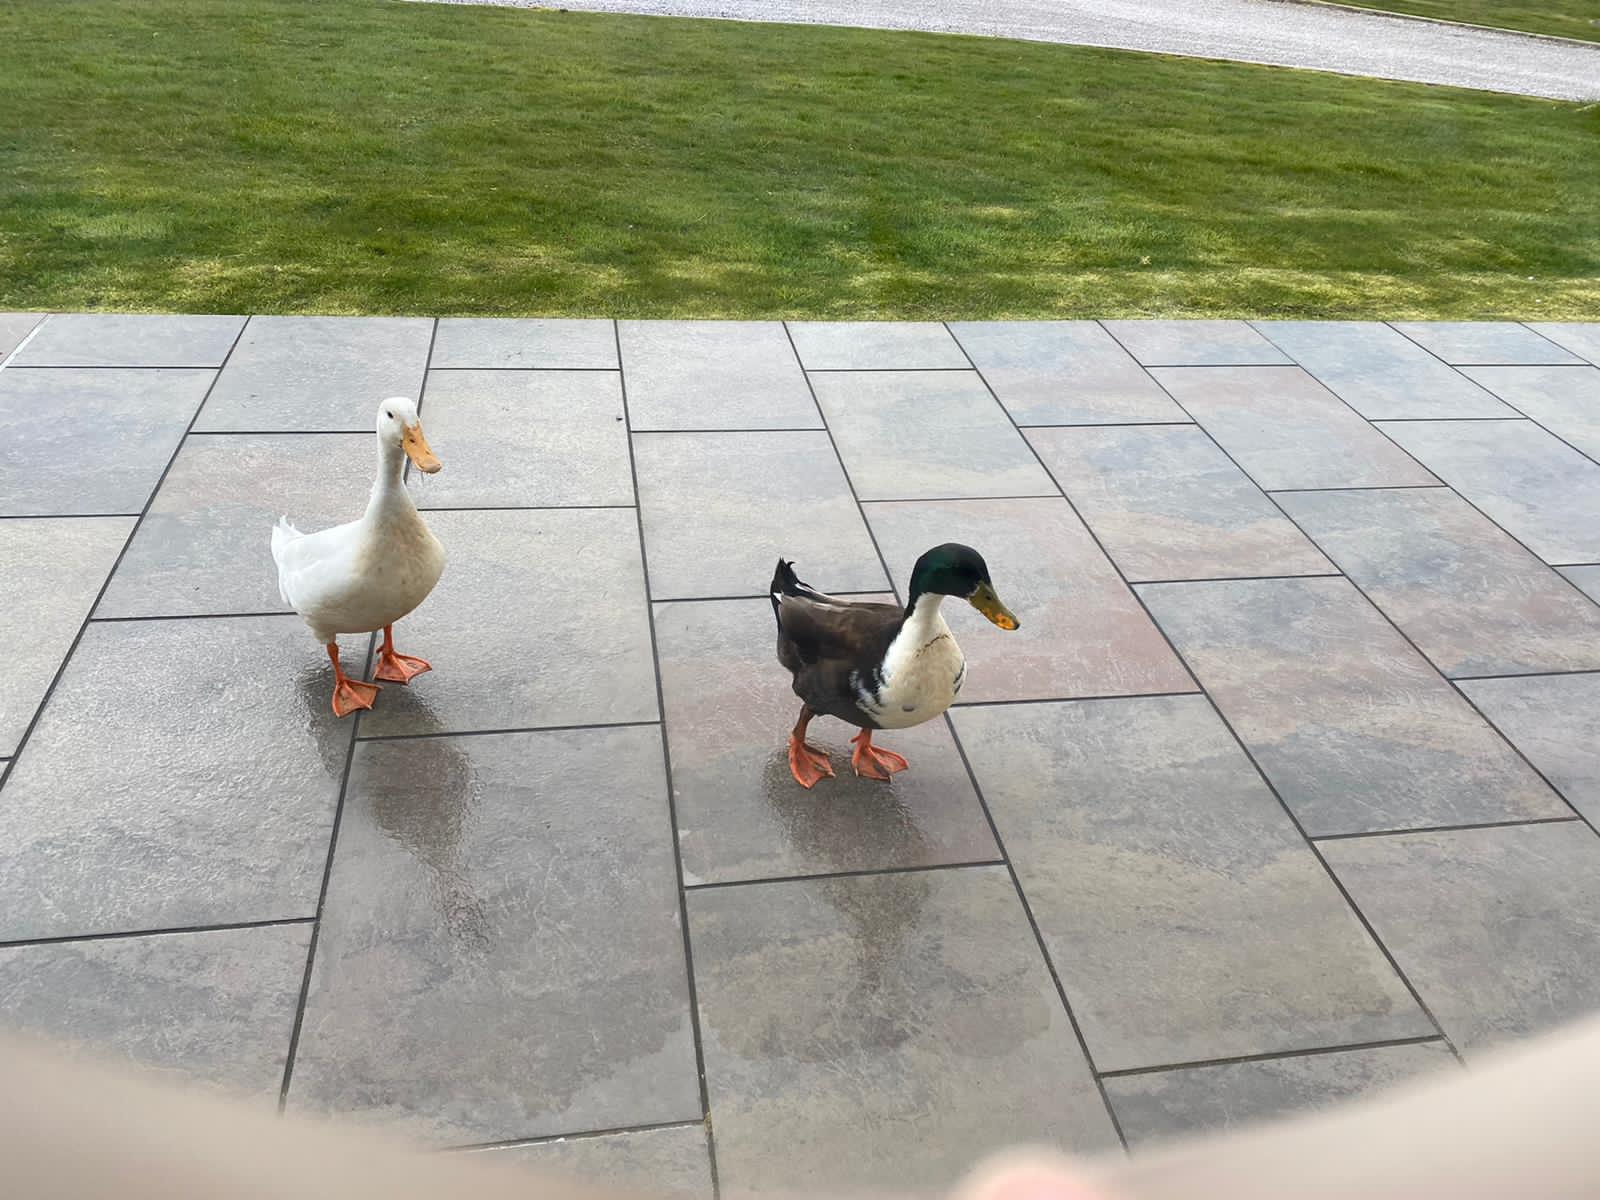 Brayton Park ducks that visit daily for food